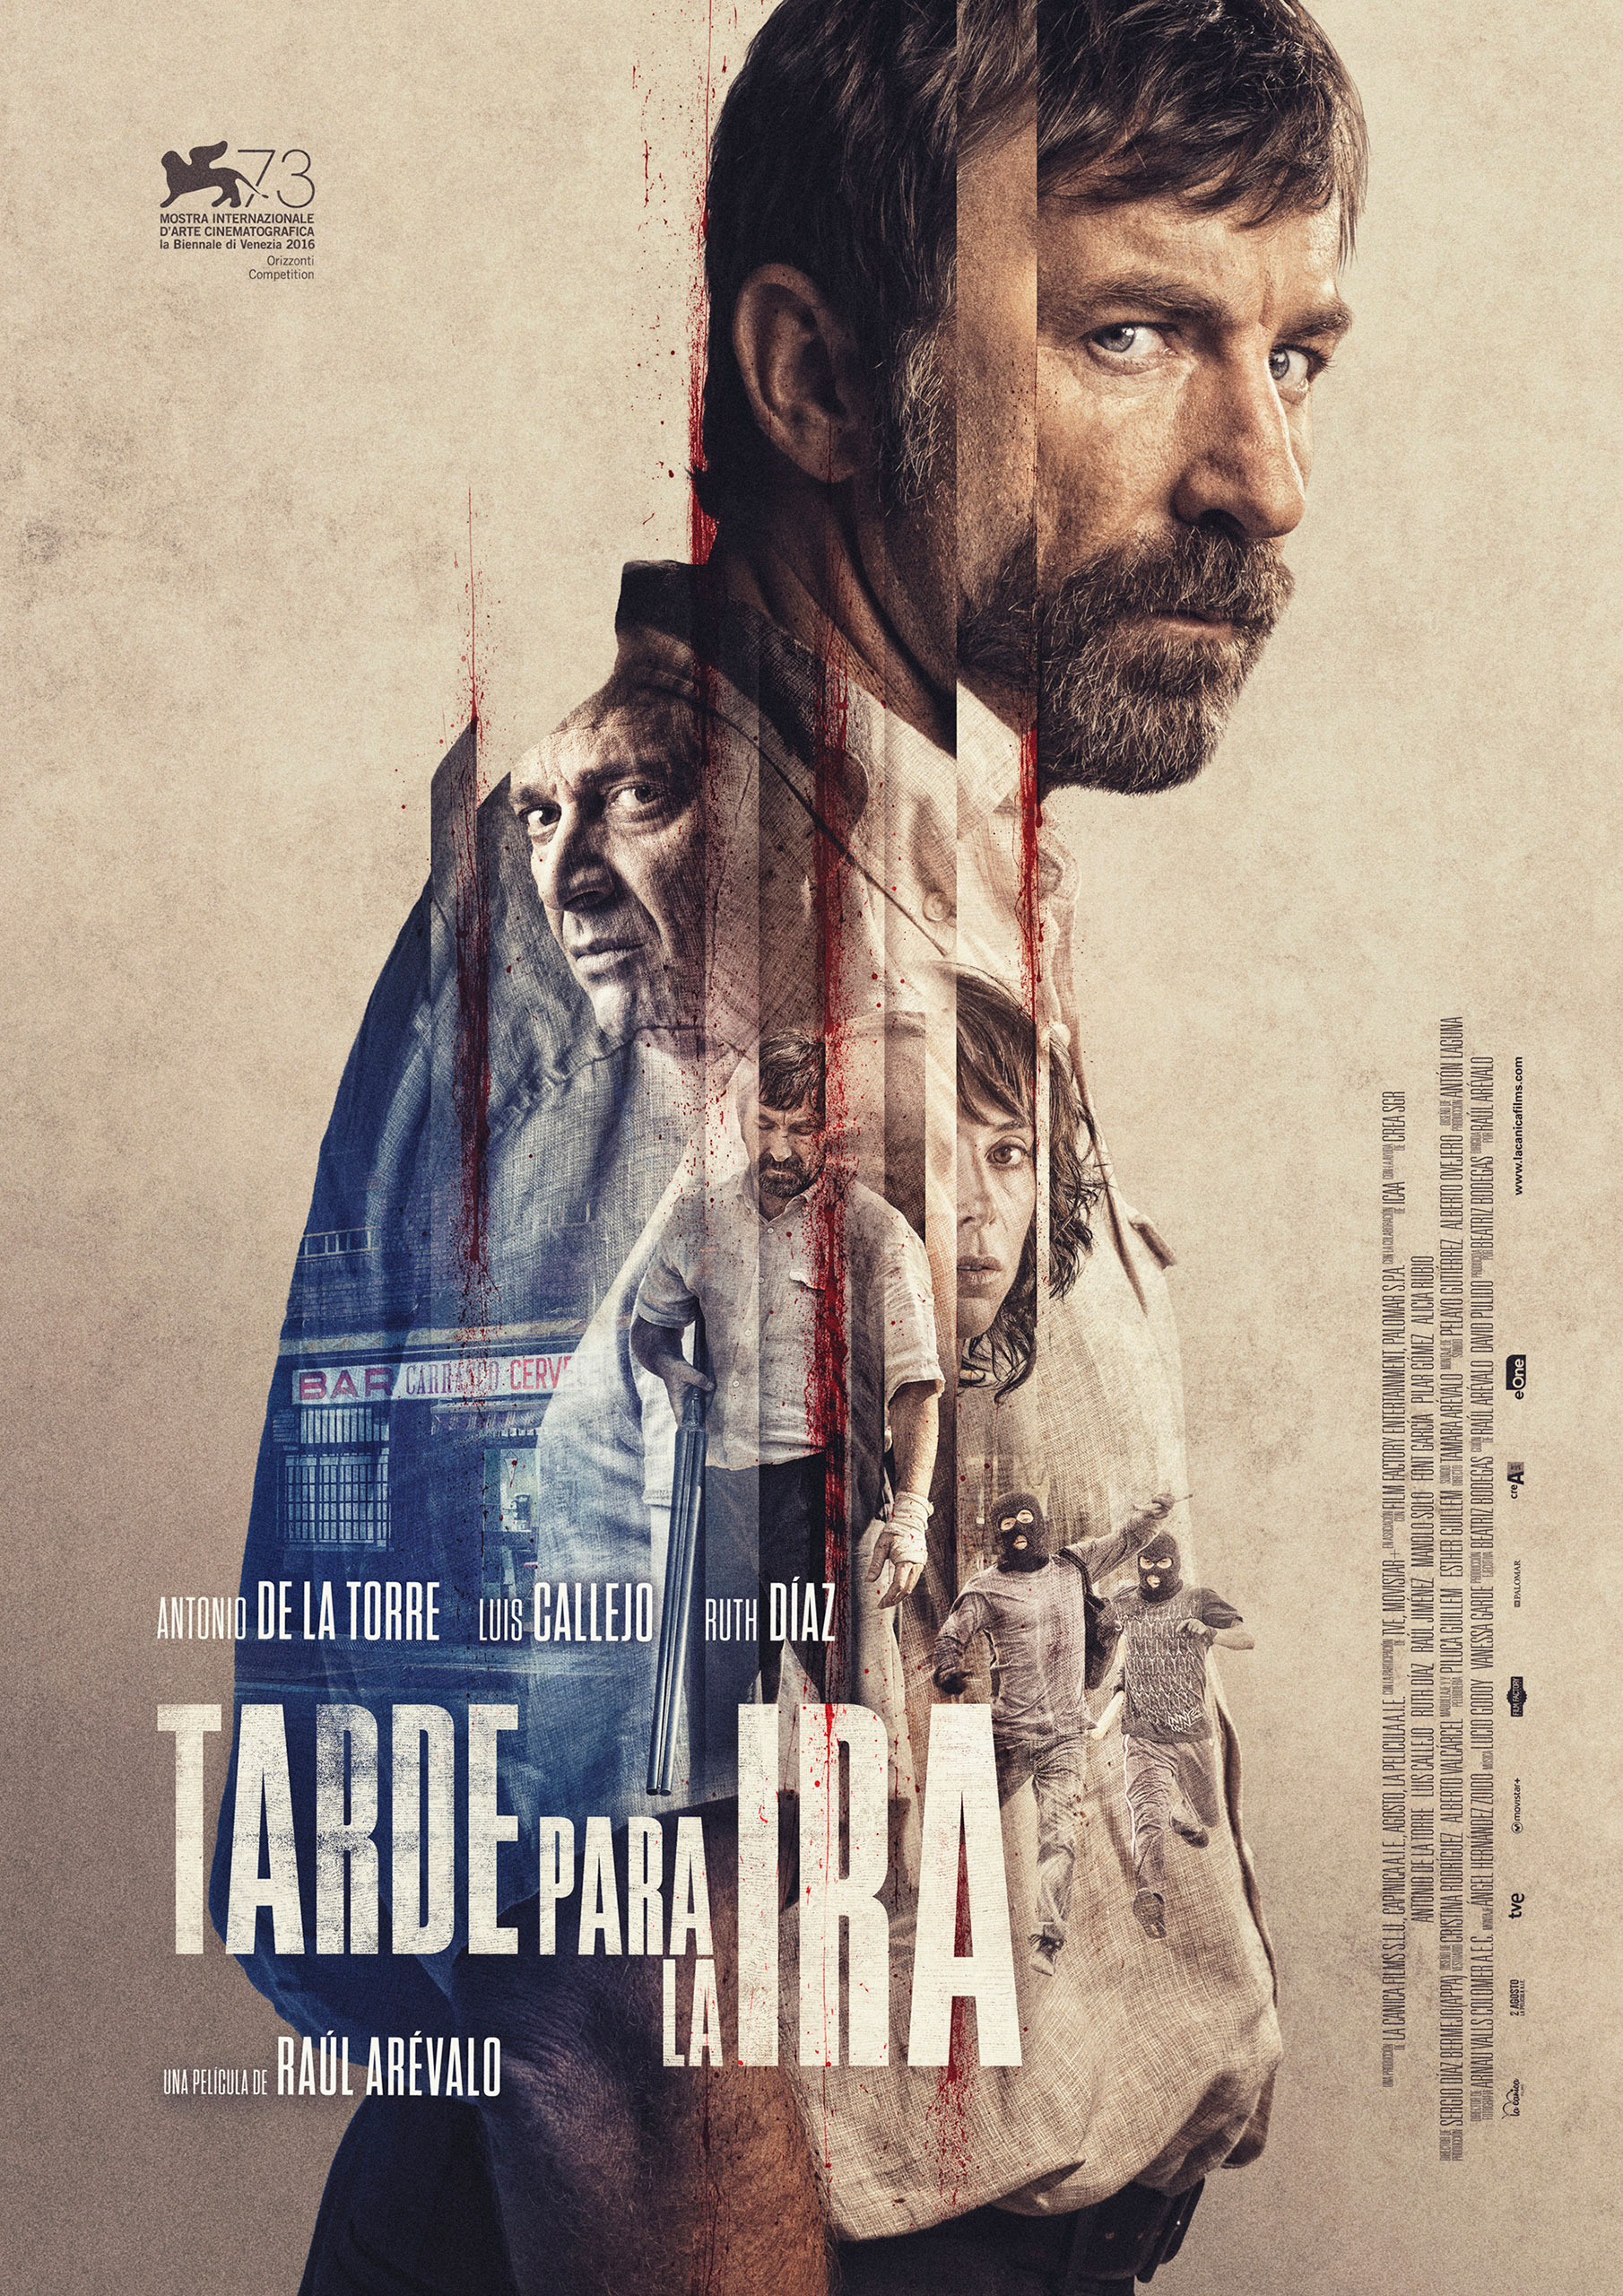 Mega Sized Movie Poster Image for Tarde para la ira (#1 of 2)